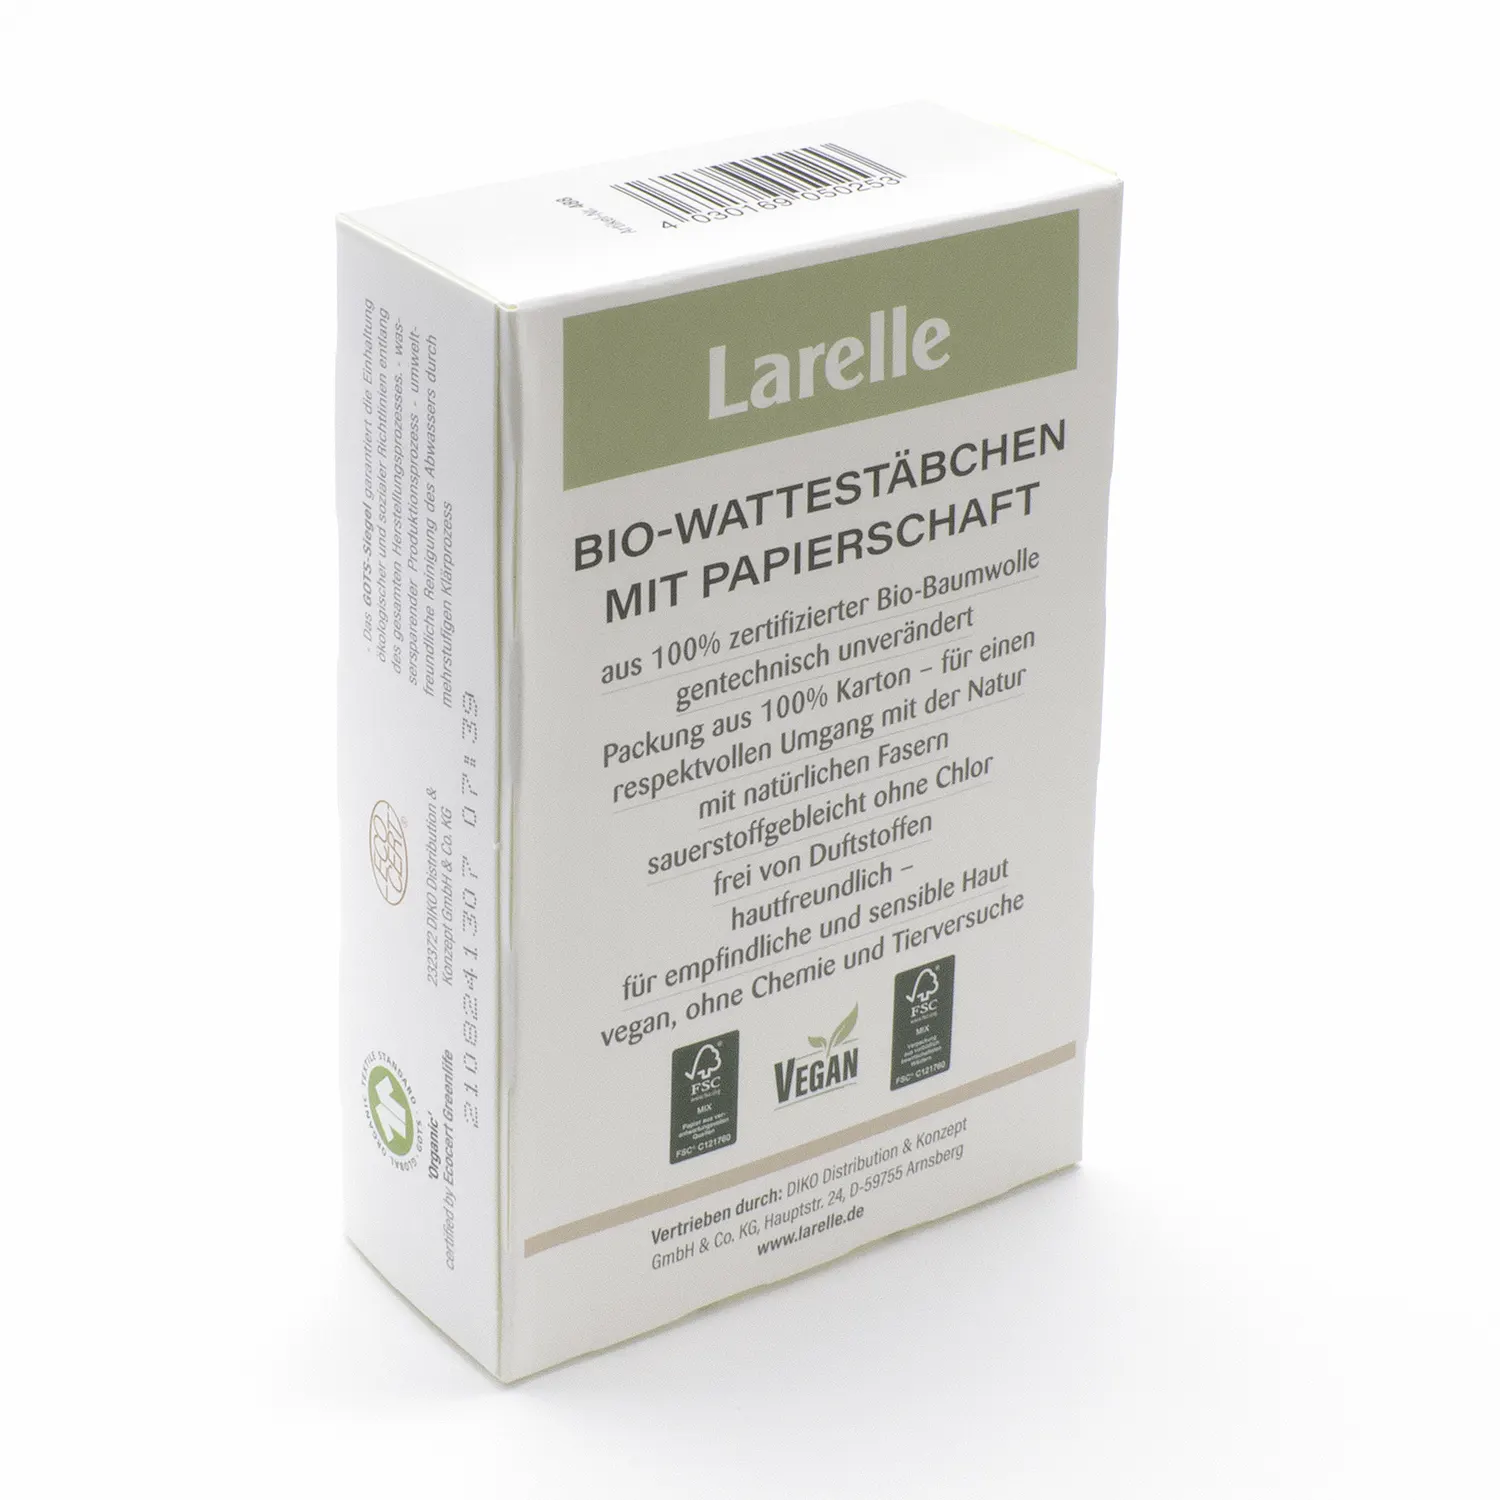 488 Larelle Bio-Wattestab